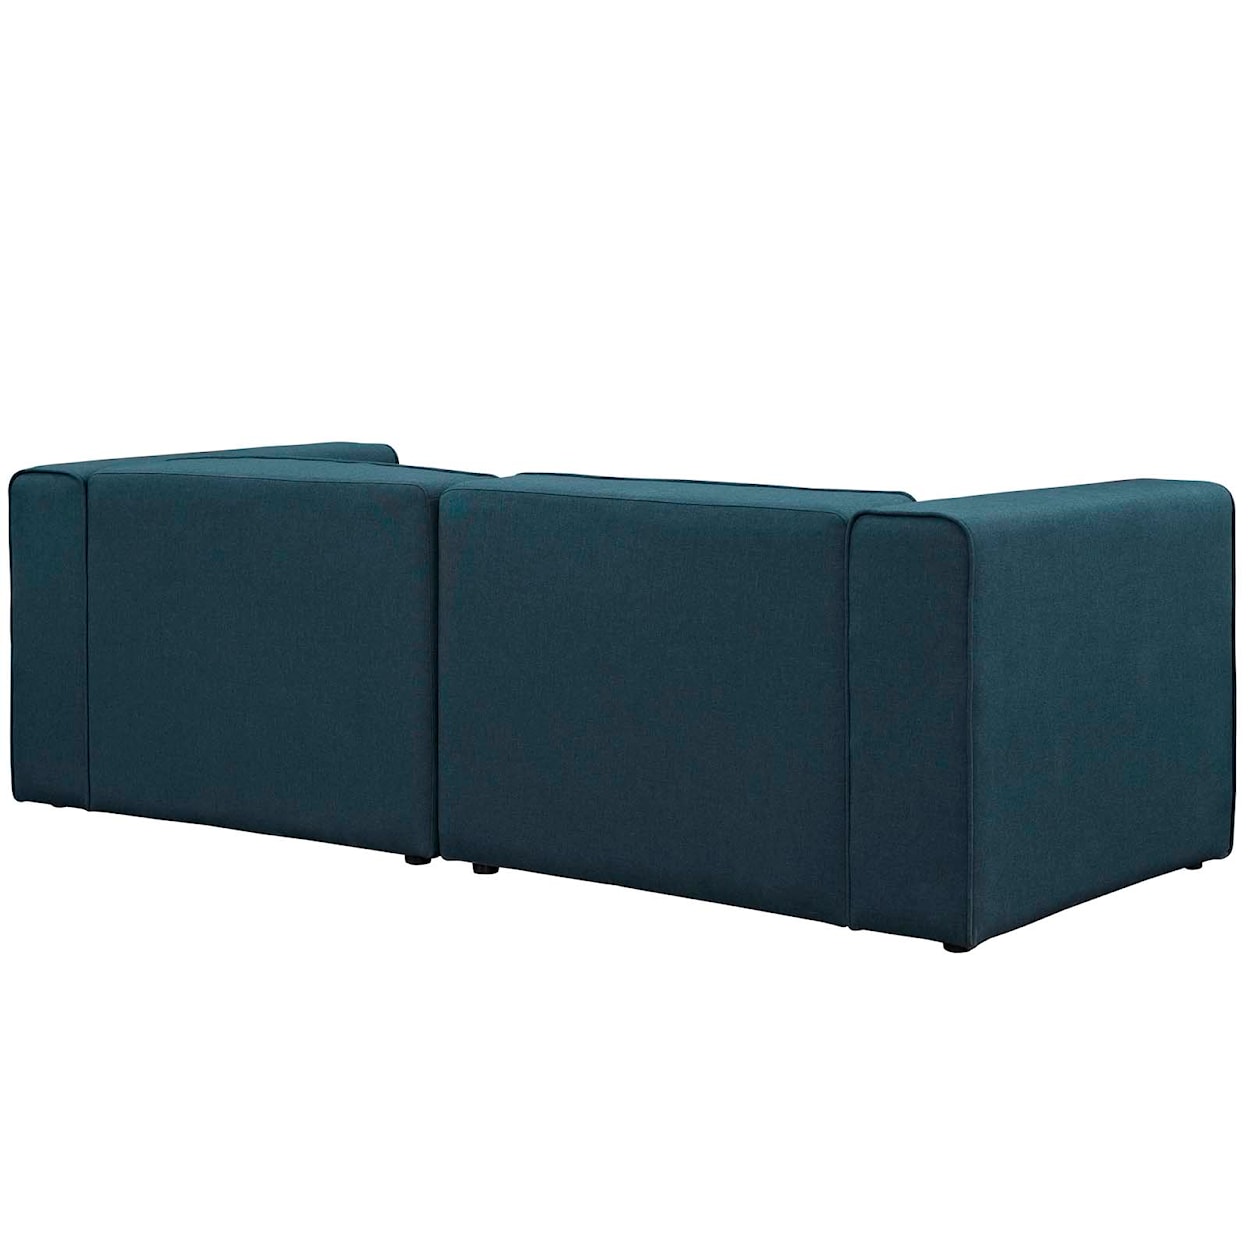 Modway Mingle 2 Piece Sectional Sofa Set